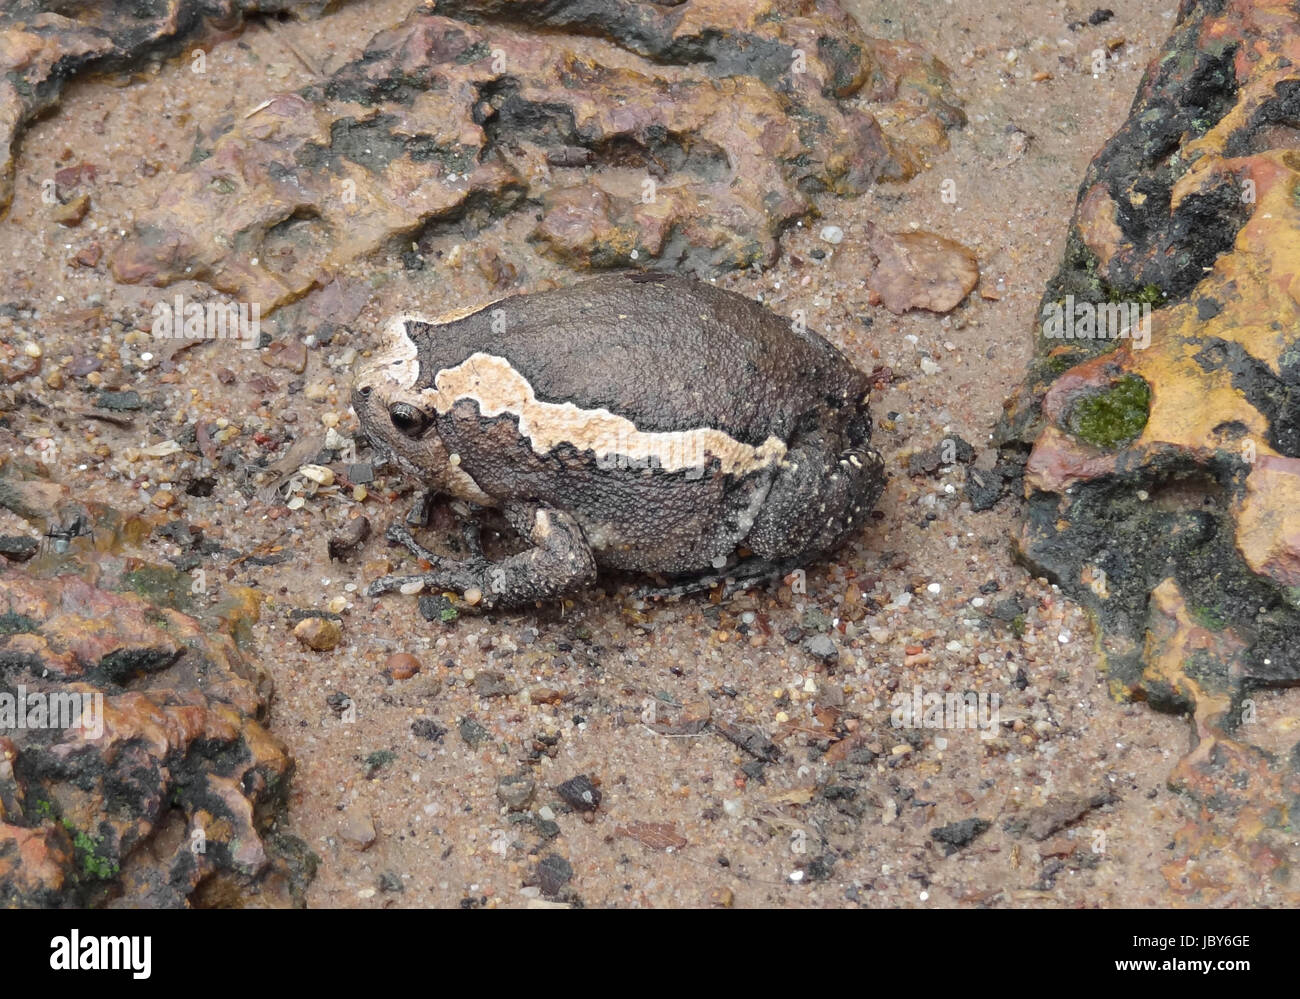 a indian bullfrog seen in Cambodia Stock Photo